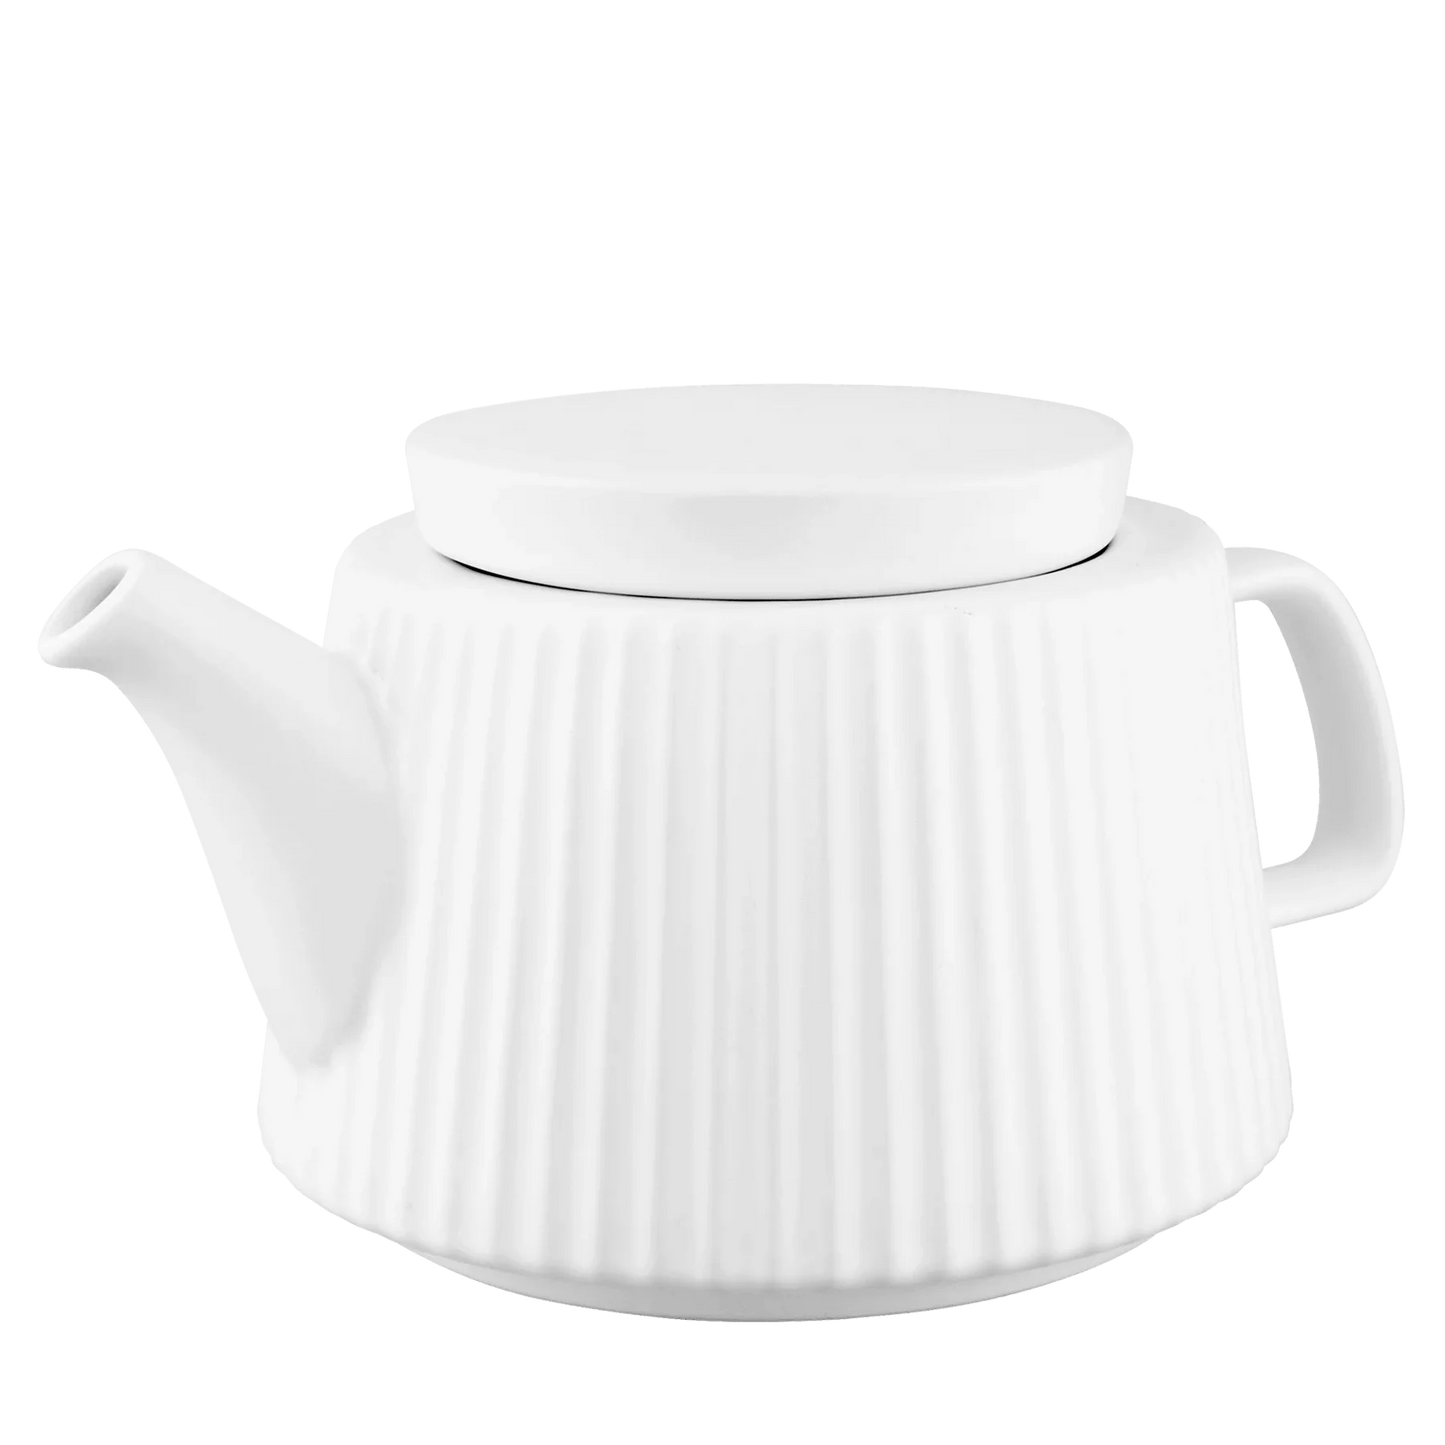 Teapot - Avanti Siena 950mL - Madura Tea